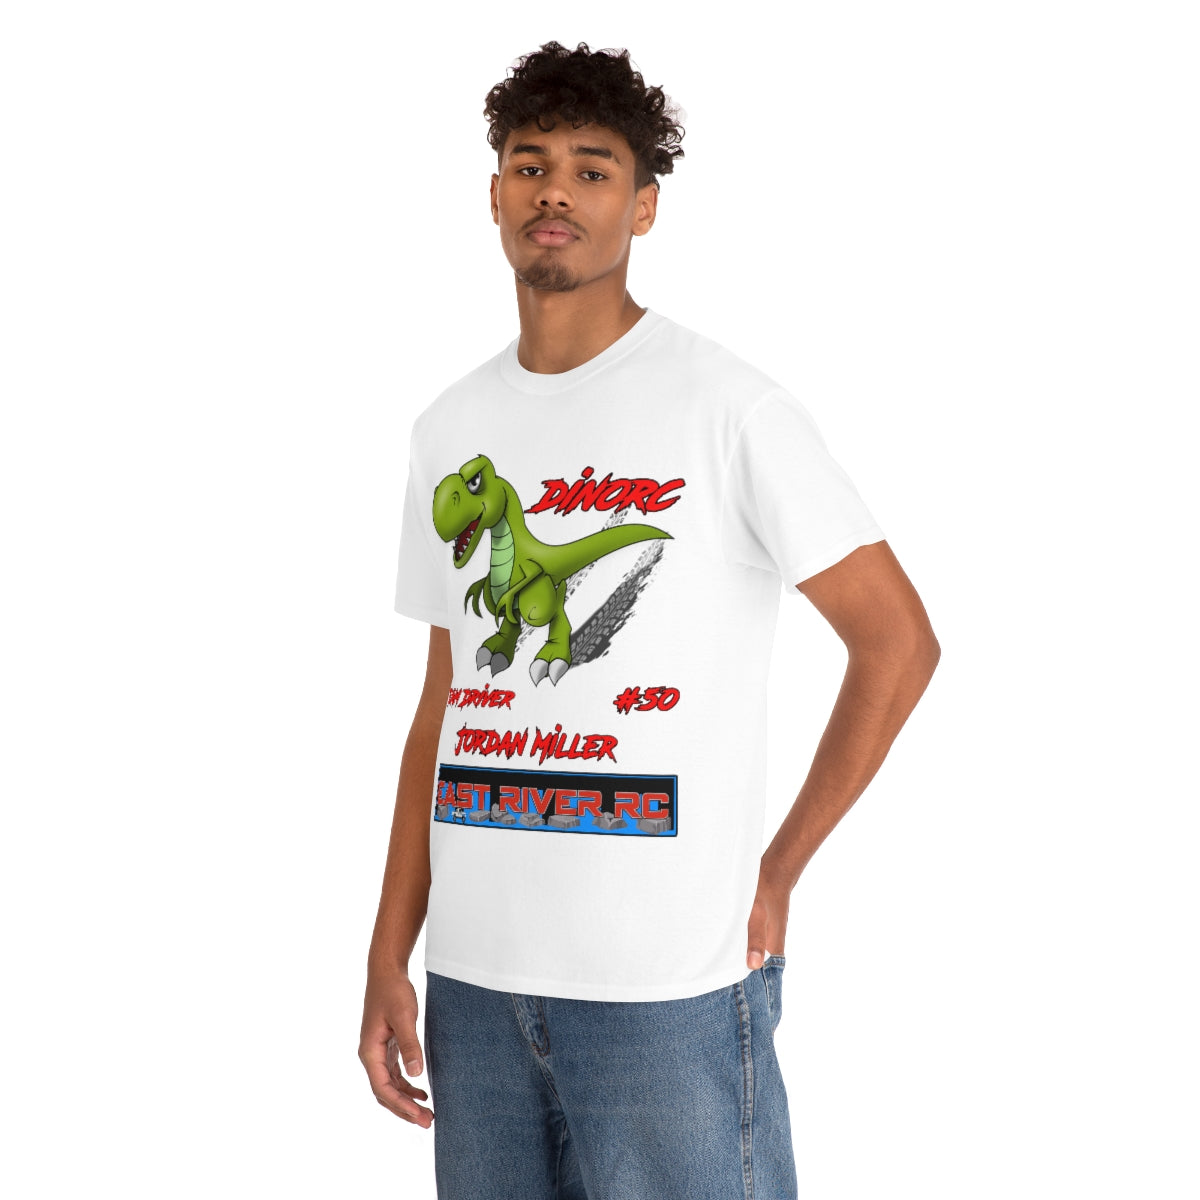 Team Driver Jordan Miller  DinoRc Logo T-Shirt S-5x